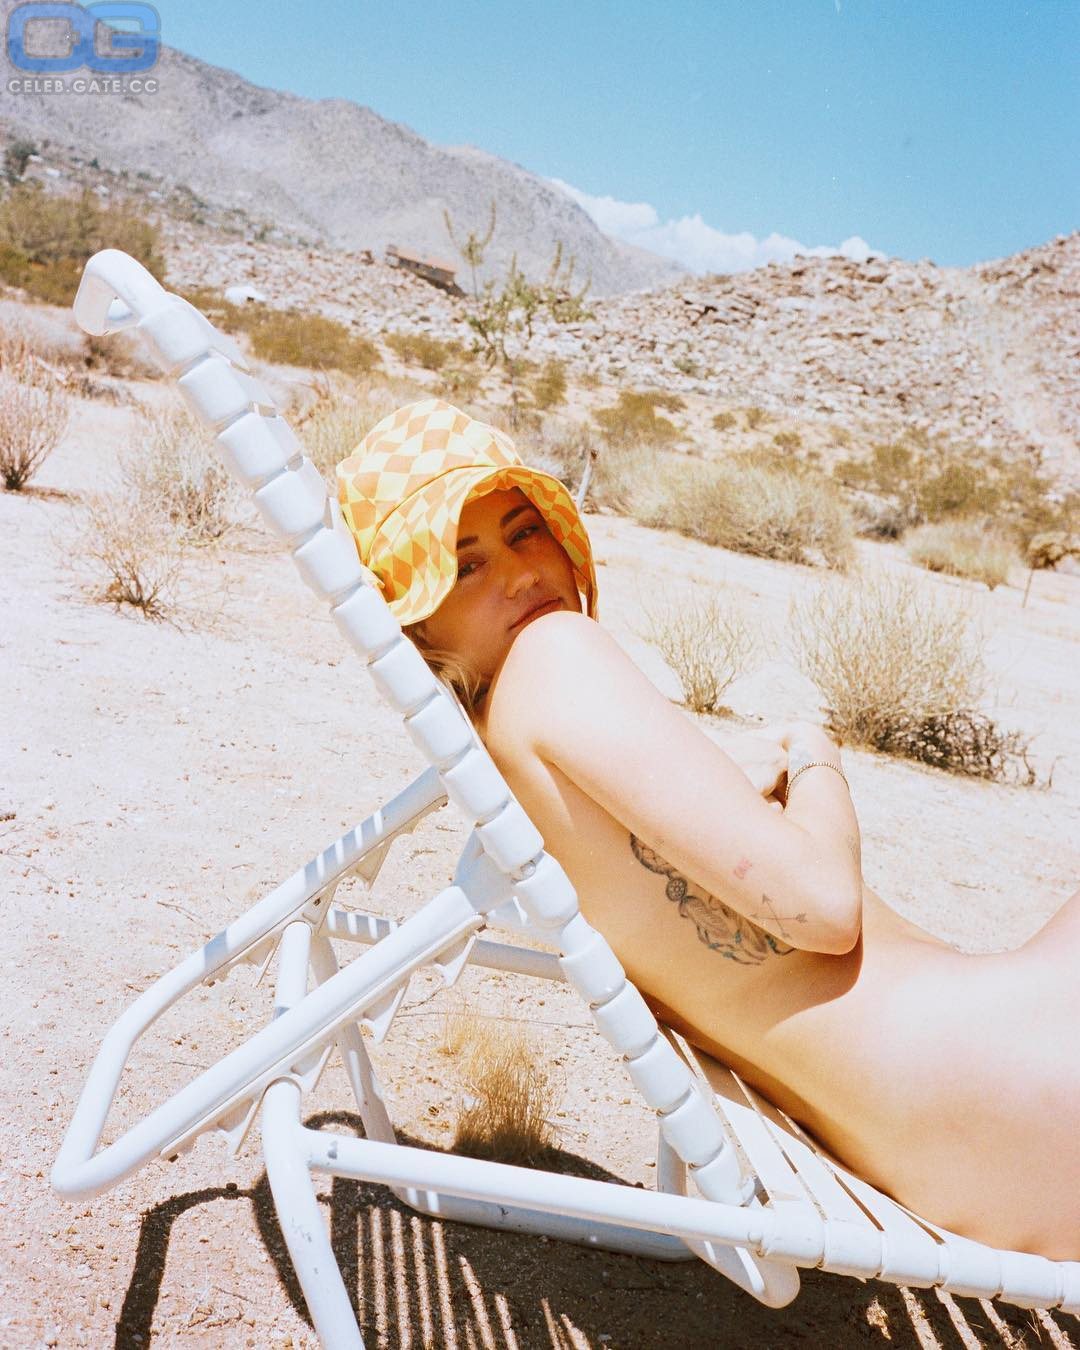 Miley Cyrus Nude Marilyn Monroe